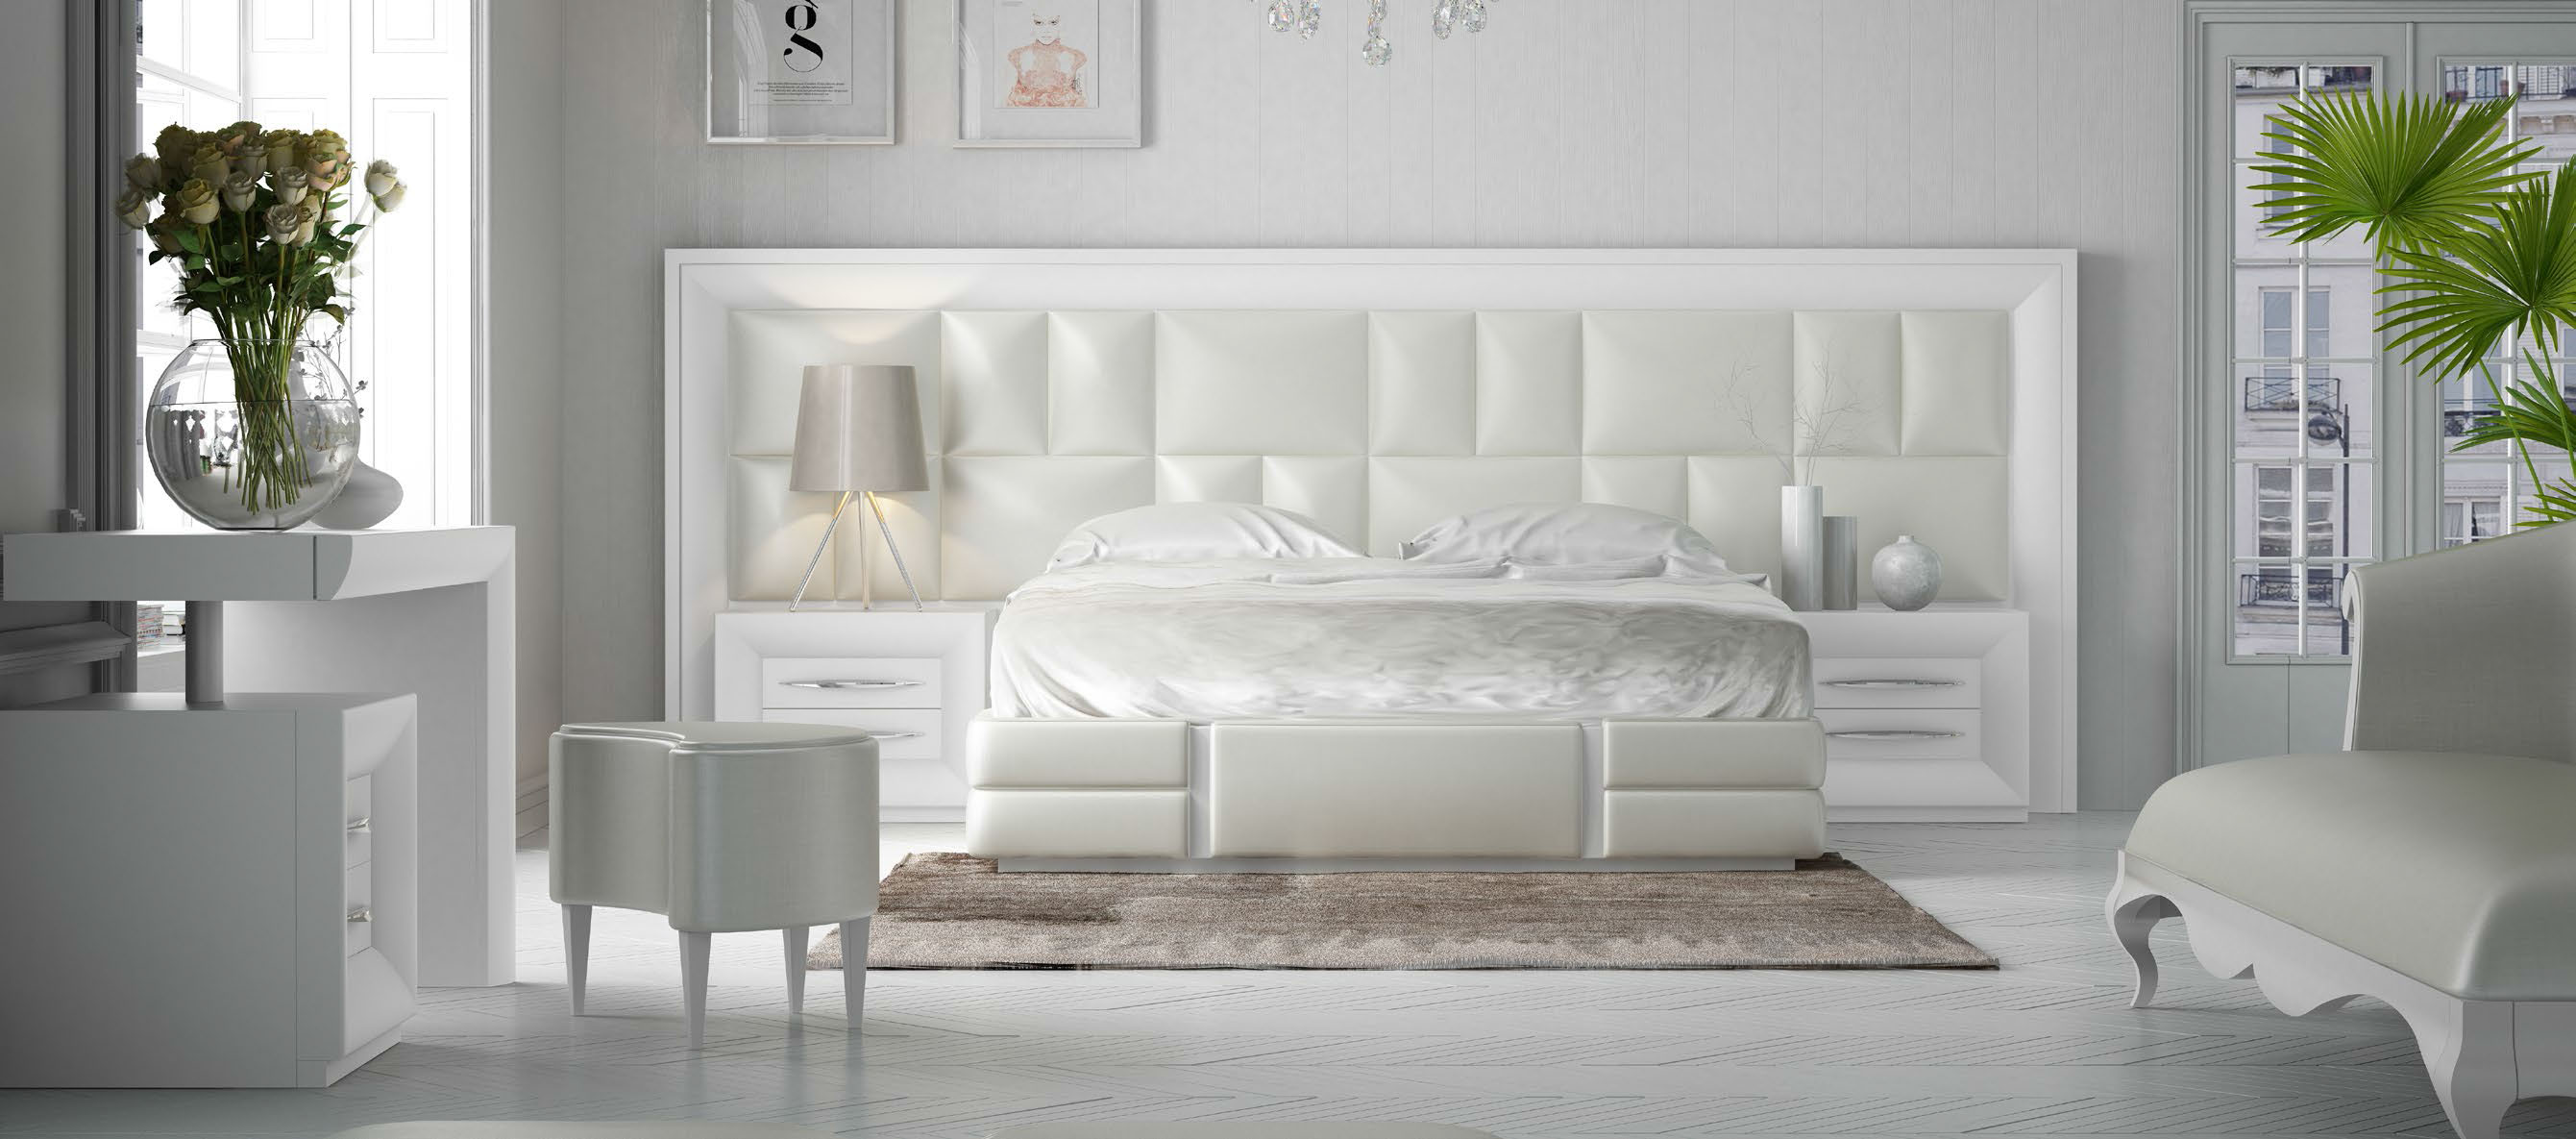 Brands Franco Furniture Bedrooms vol3, Spain DOR 114